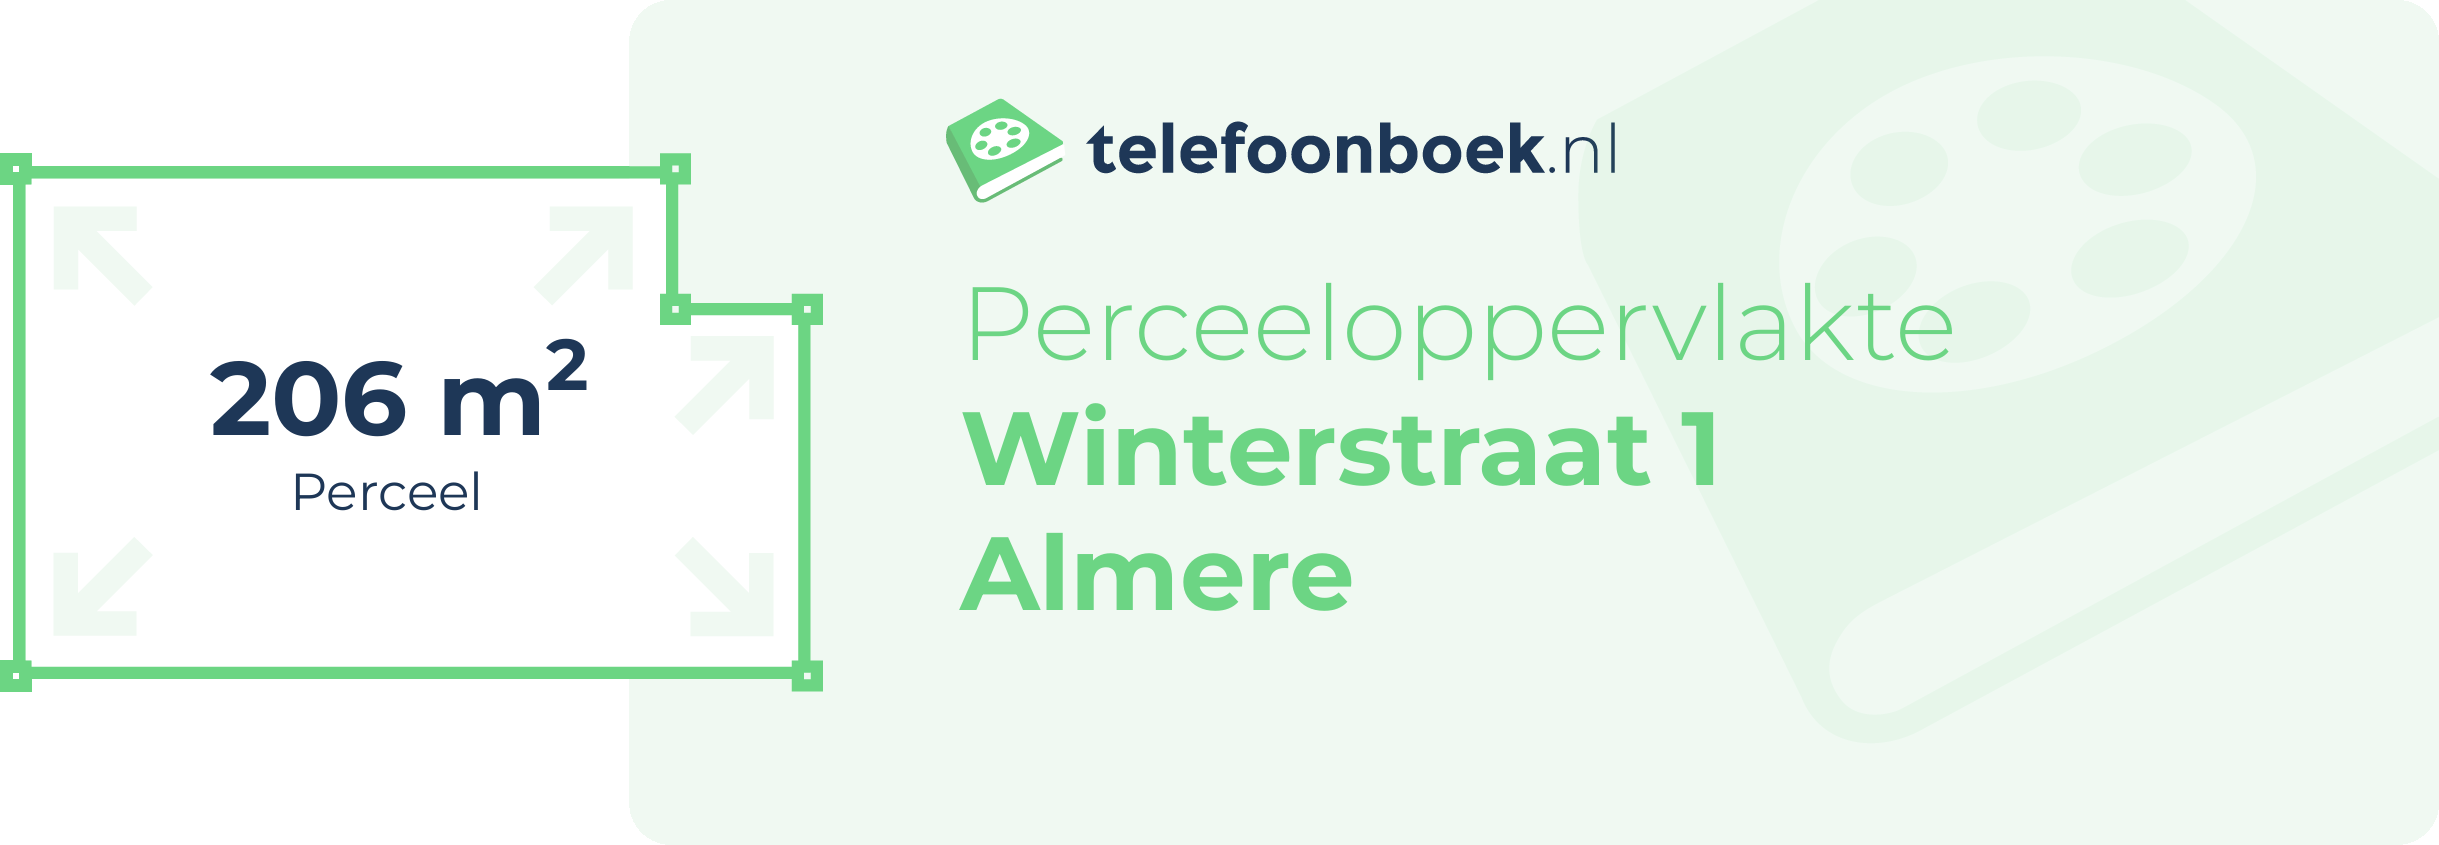 Perceeloppervlakte Winterstraat 1 Almere